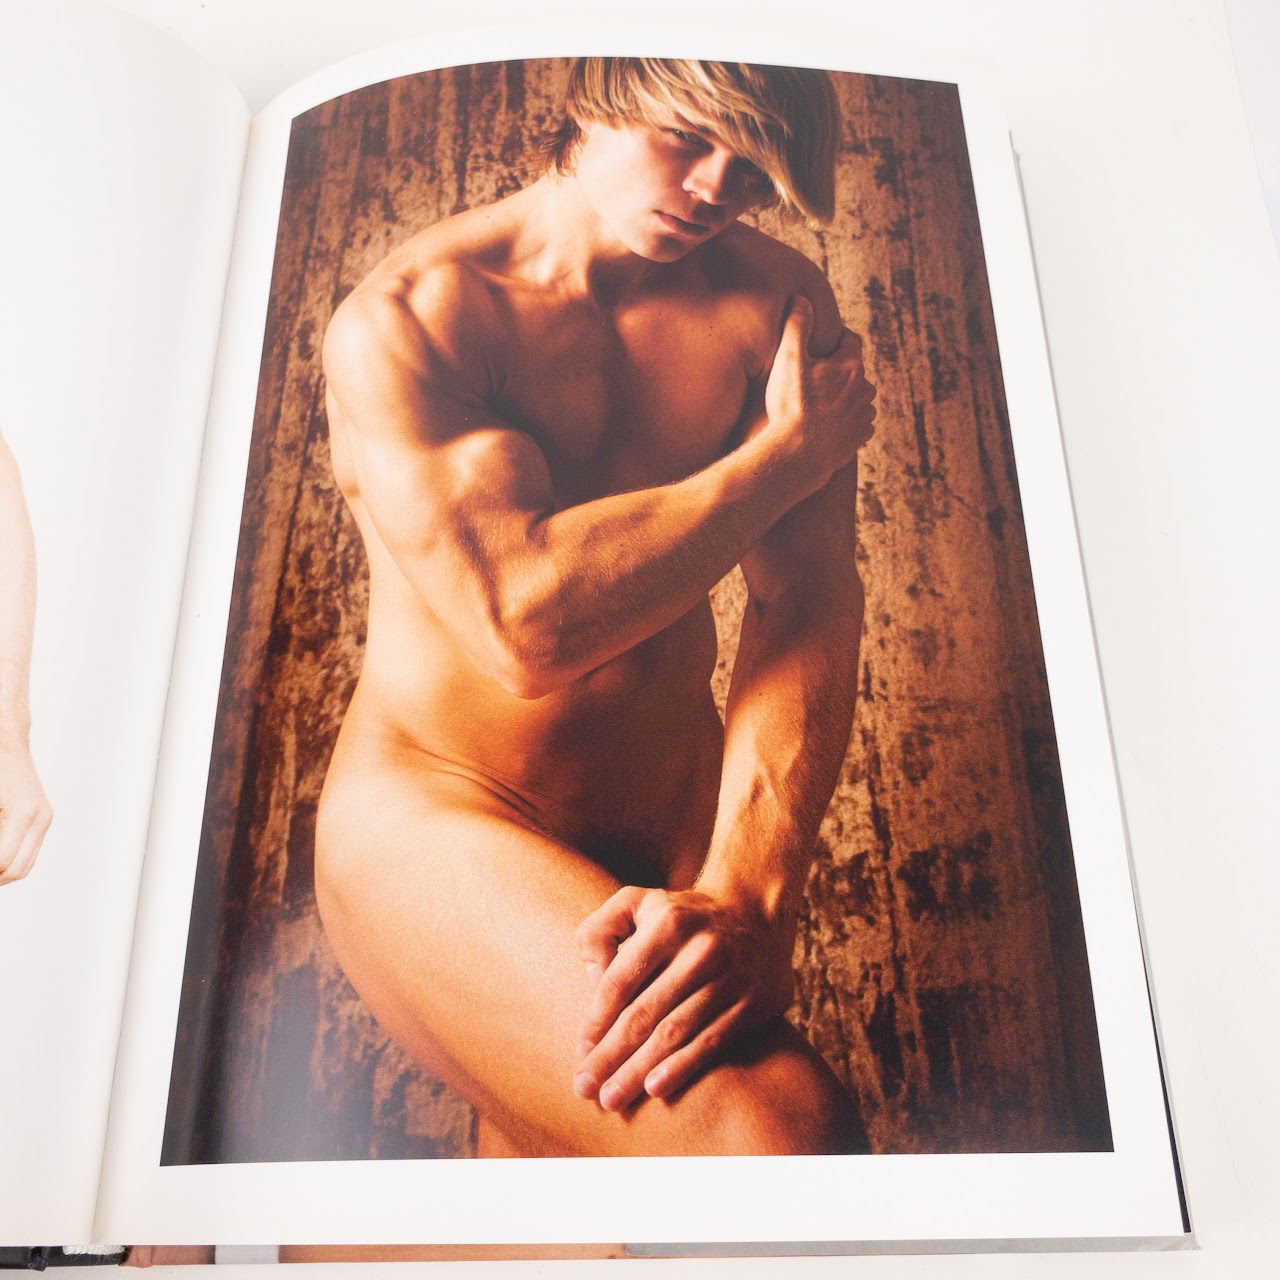 Dylan Rosser 'X-Posed' NSFNW Book